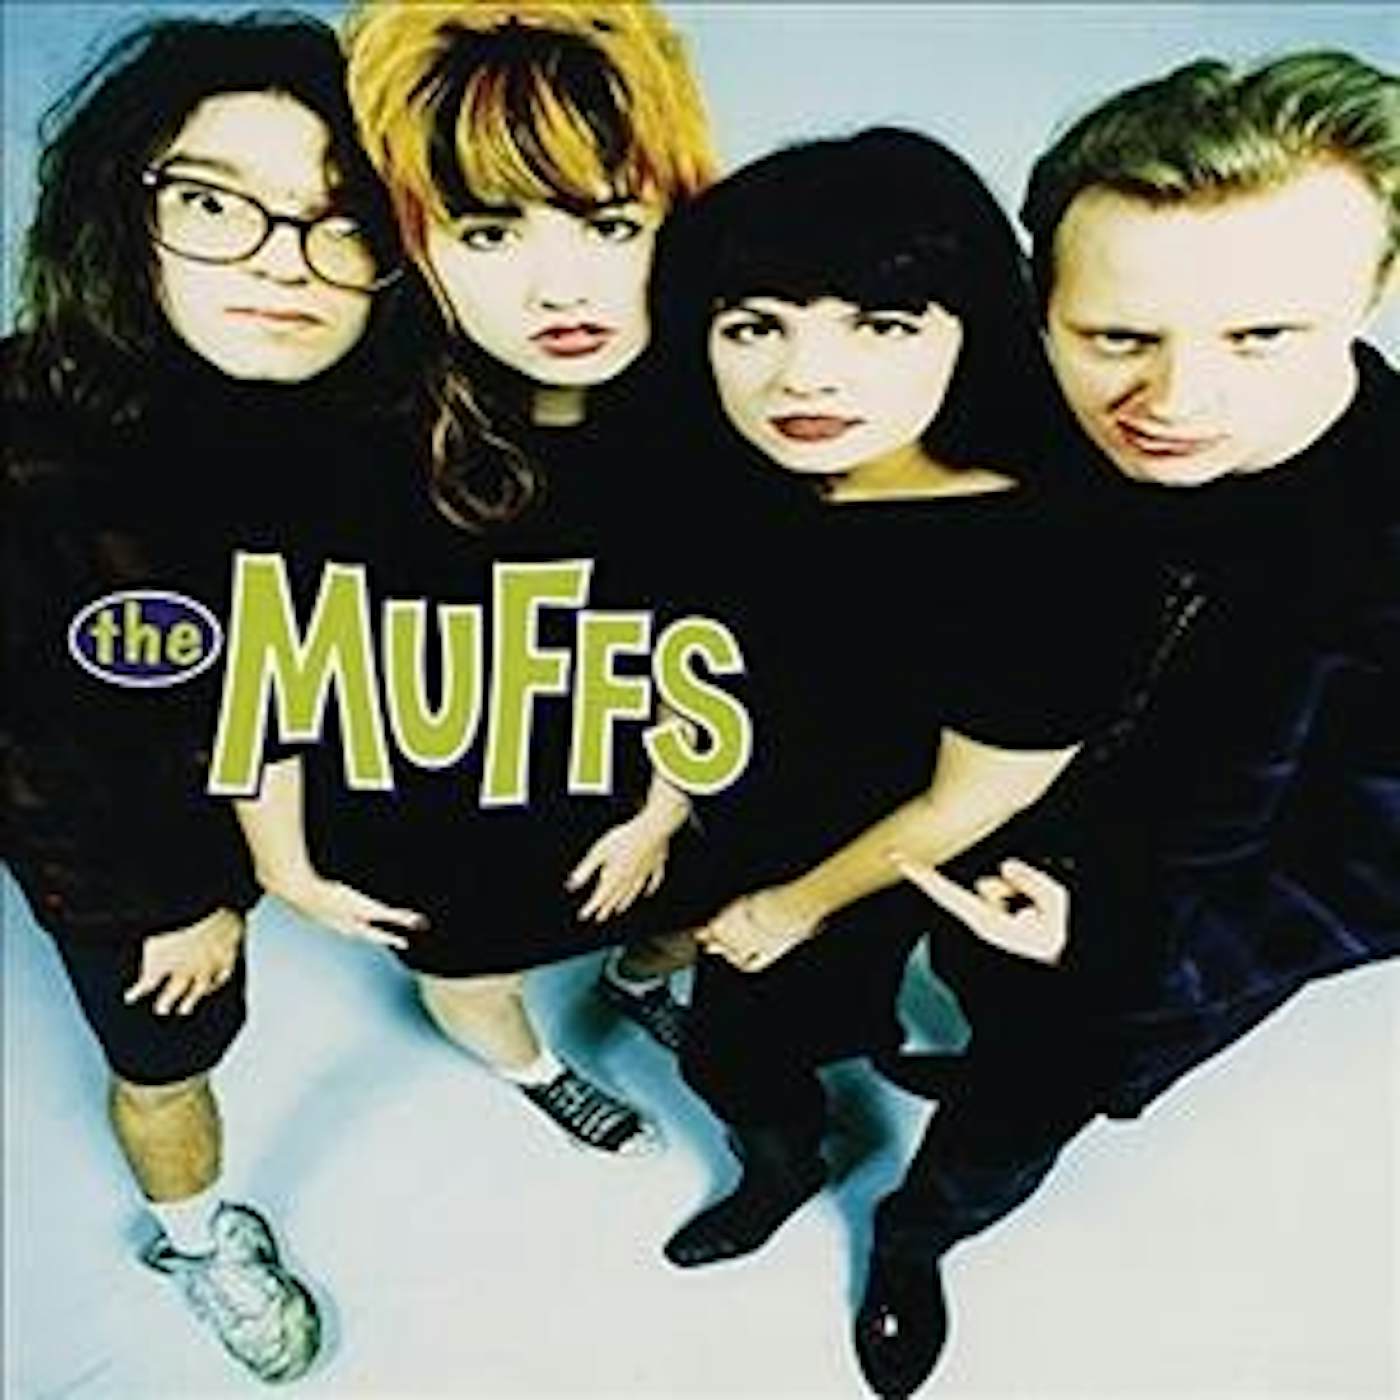 The Muffs Vinyl Record